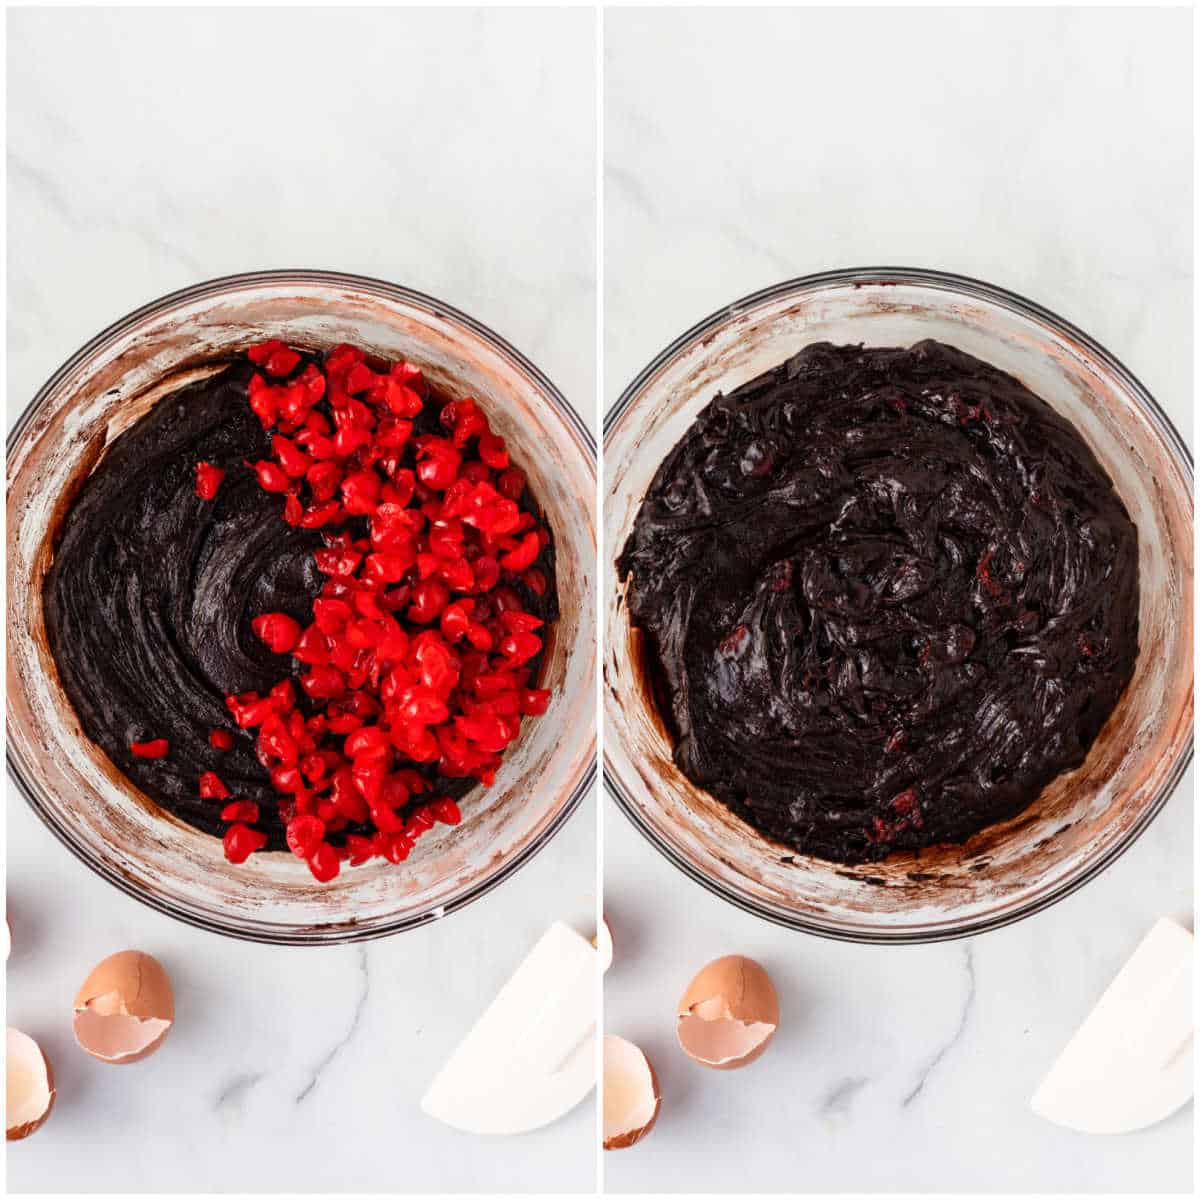 Steps to make chocolate cherry brownies.